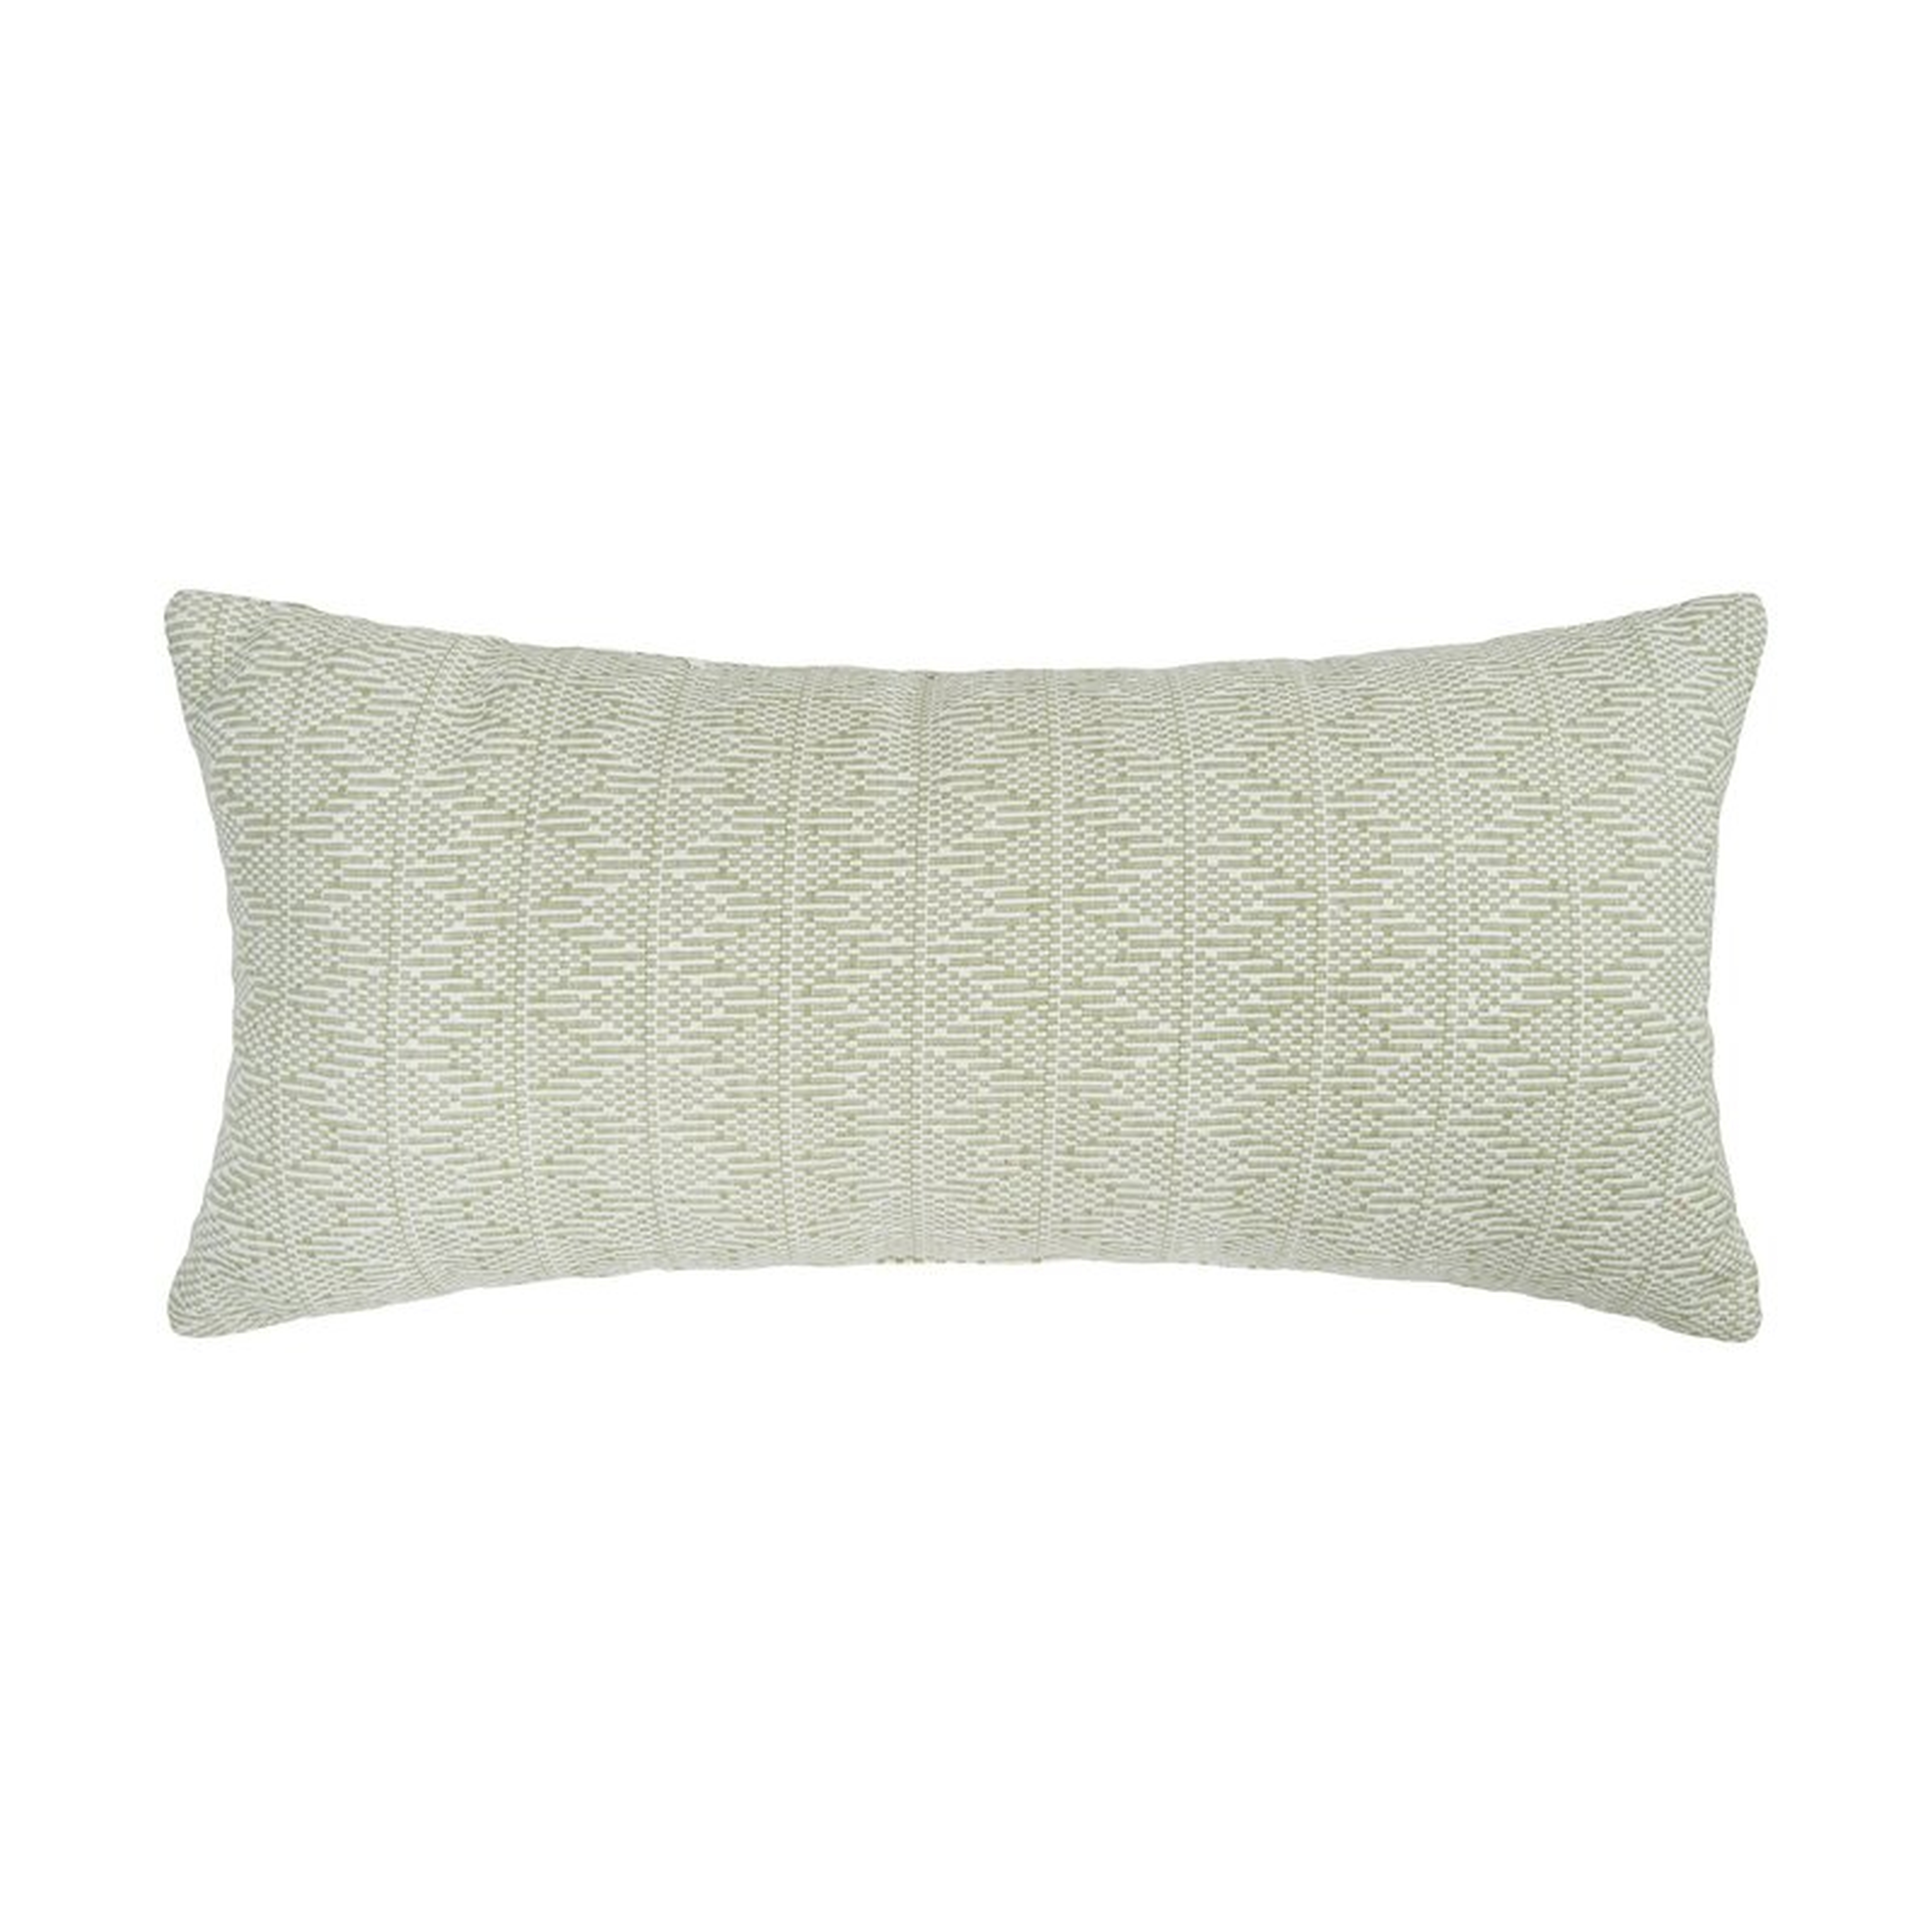 Liveva Rectangular Cotton Pillow Cover and Insert - Wayfair